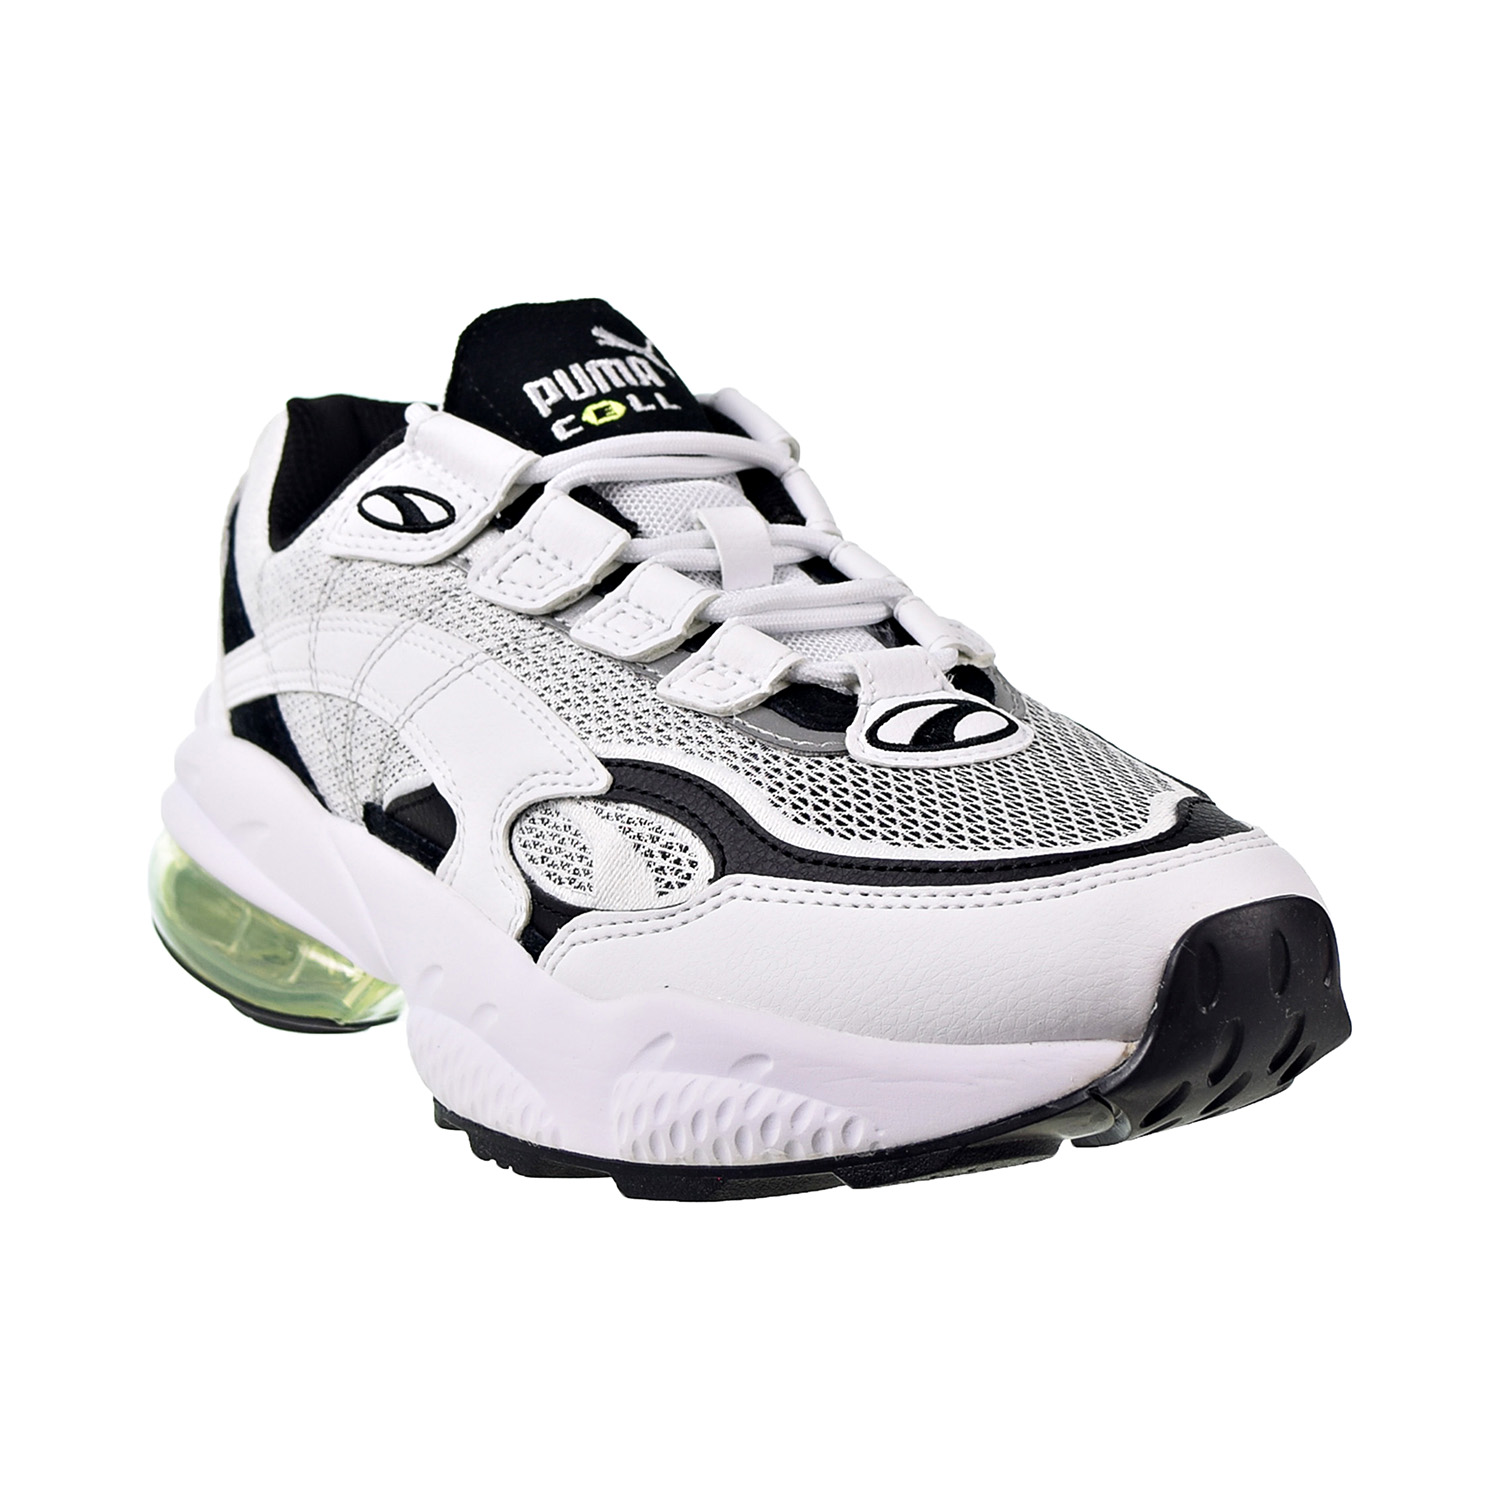 Puma Cell Venom Alert Men's Shoes White-Black 369810-03 - image 2 of 6